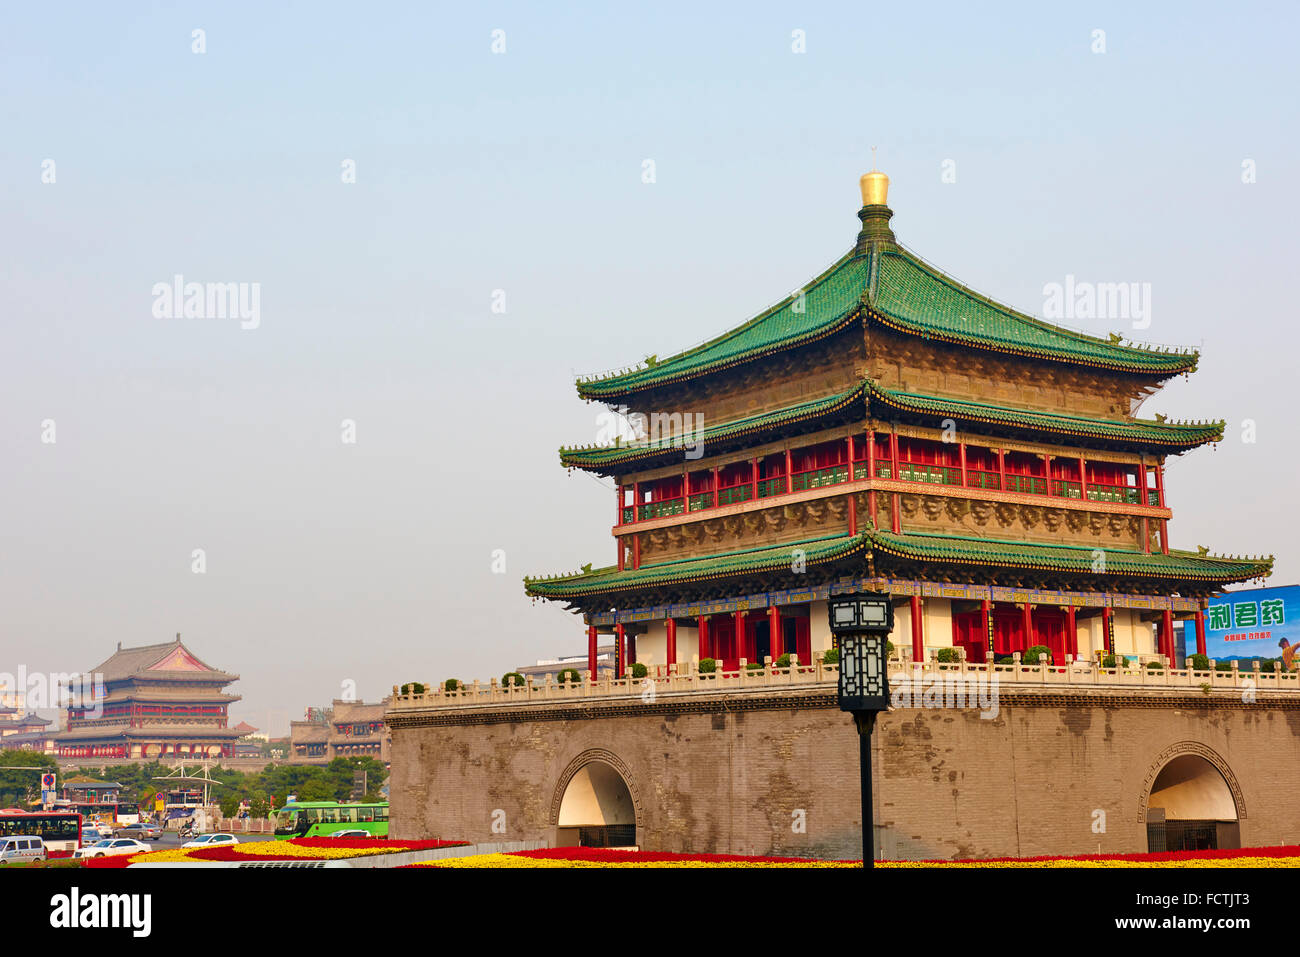 Cina, provincia di Shaanxi, Xian, Torre Campanaria del XIV secolo ricostruita da Qing nel 1739 Foto Stock